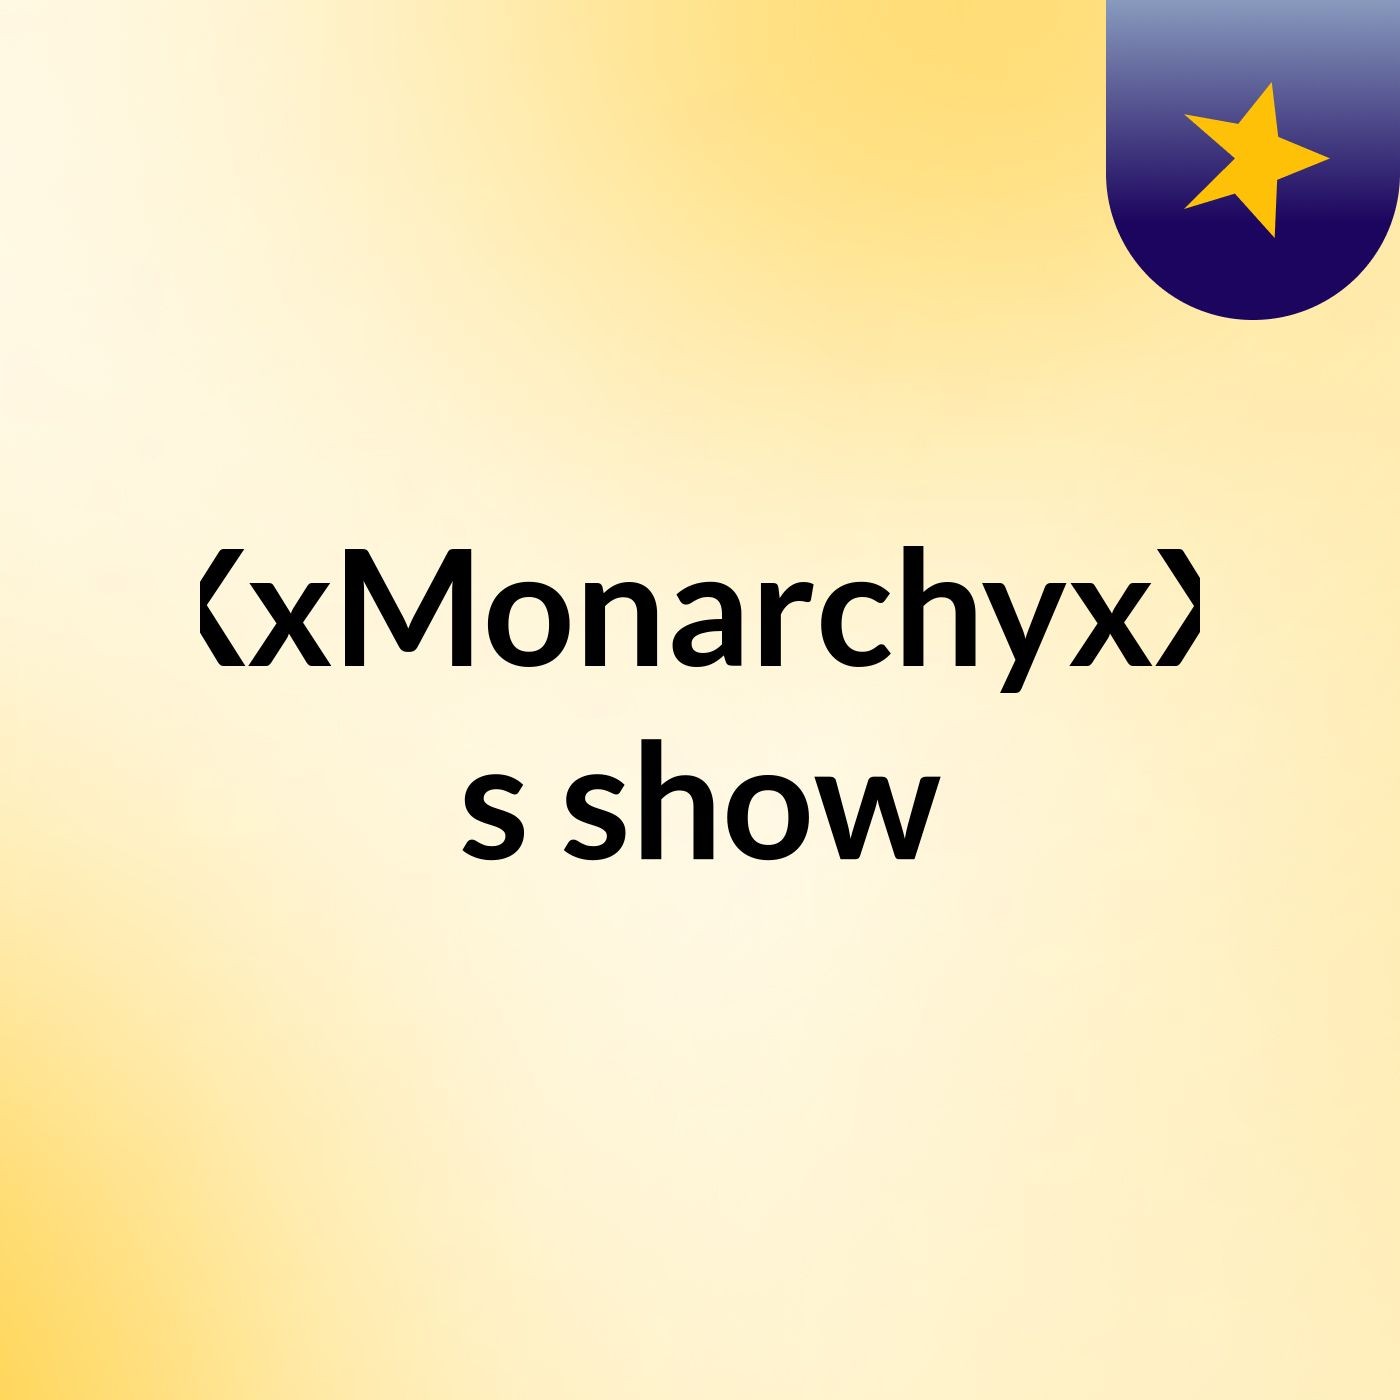 Episode 2 - XxMonarchyxX's show